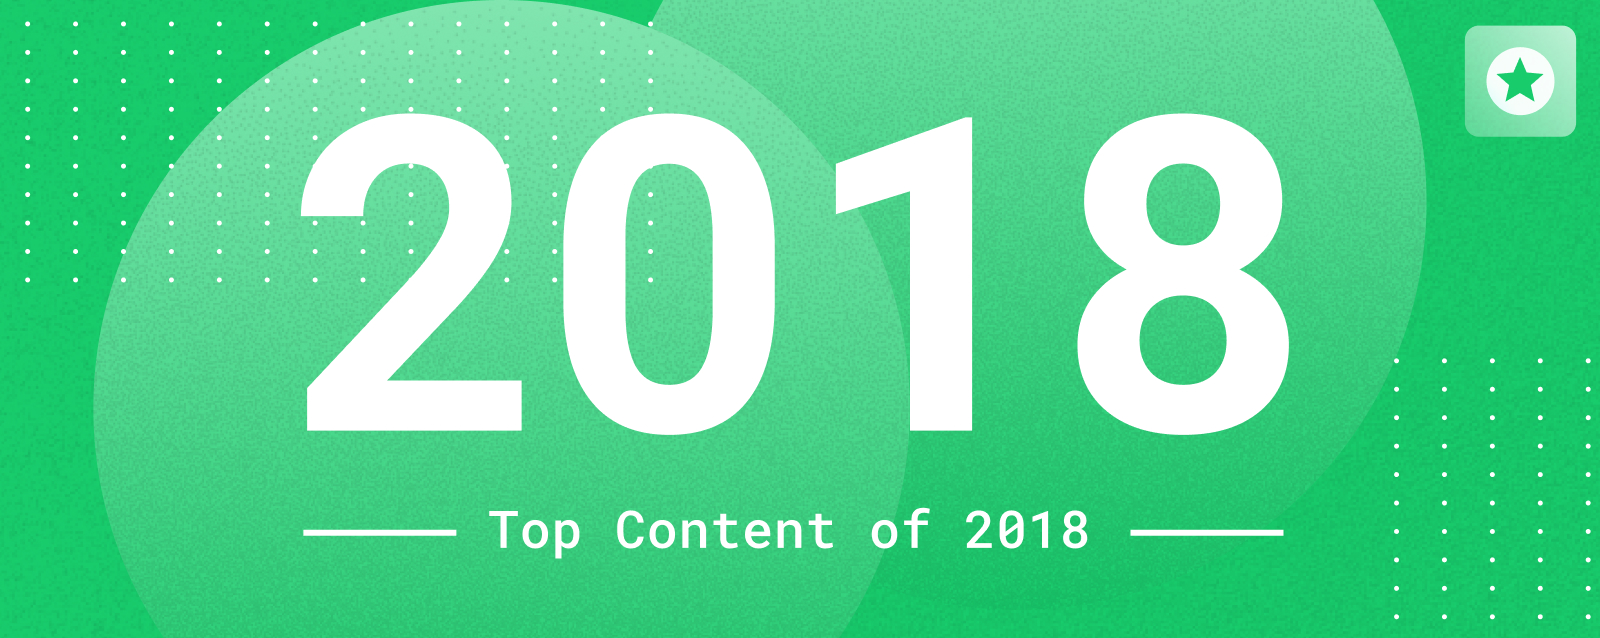 Top content 2018